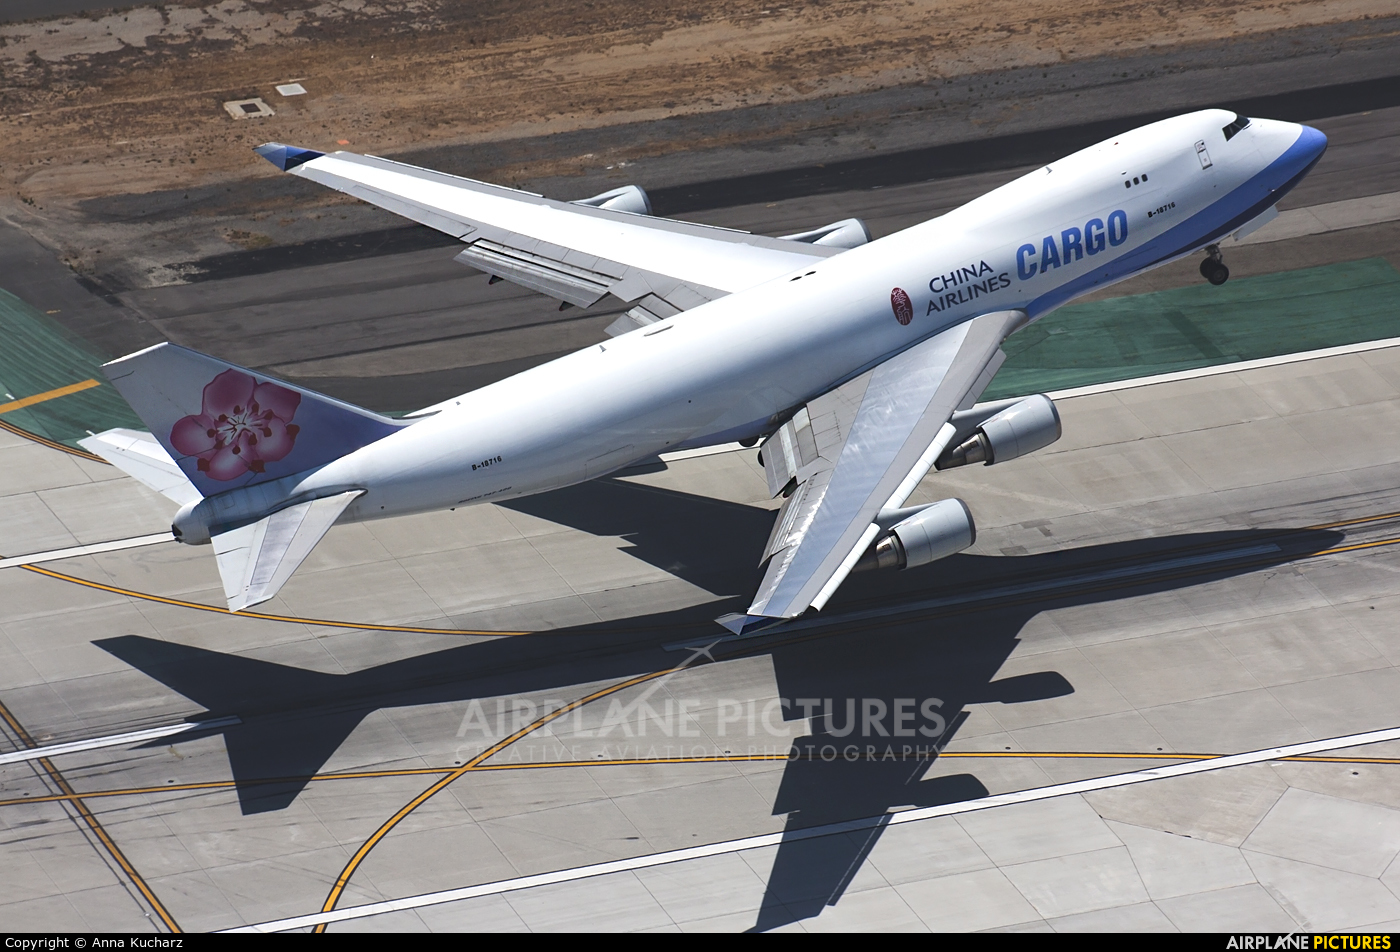 China Airlines Cargo B-18716 aircraft at Los Angeles Intl